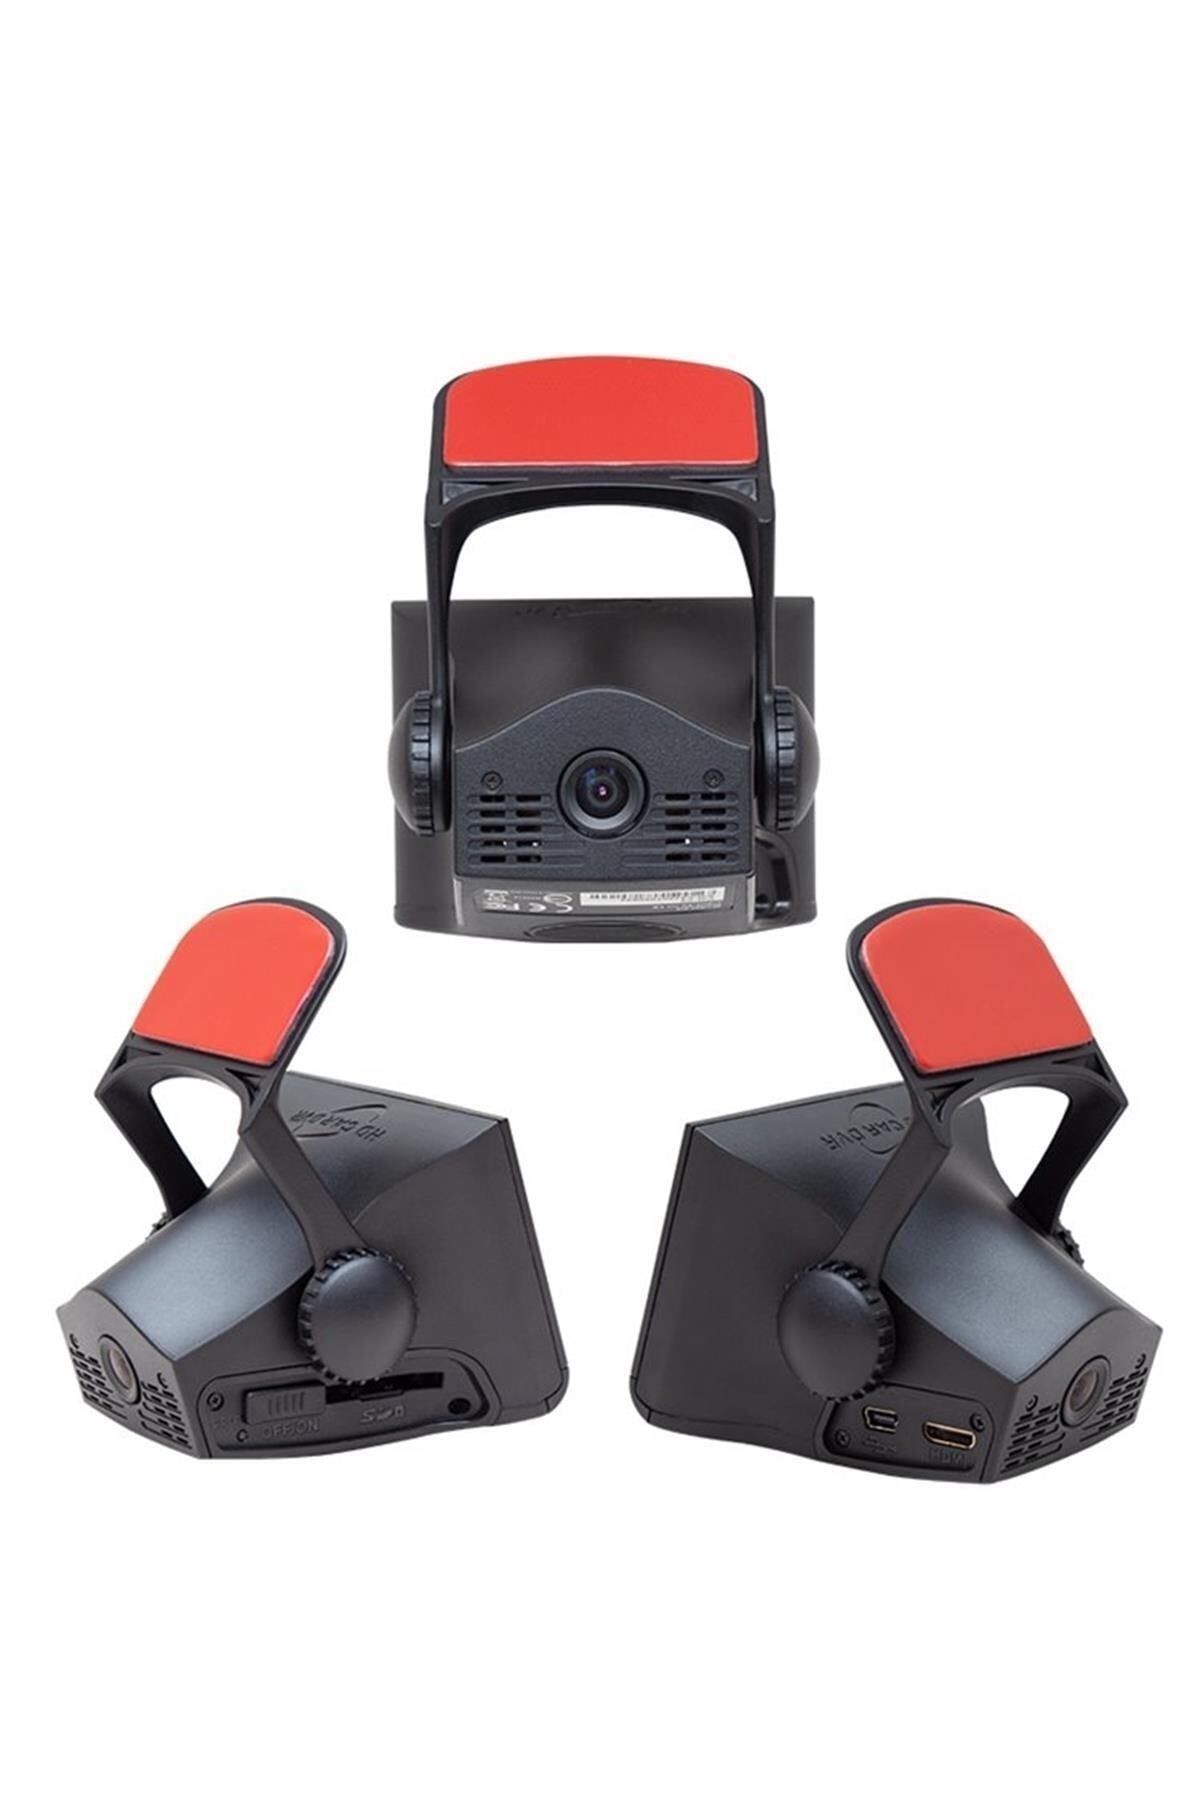 Powermaster Pm3 3 Inç Ekran 1080p Hdmı Girişli Araç Yol Kamerası 5699